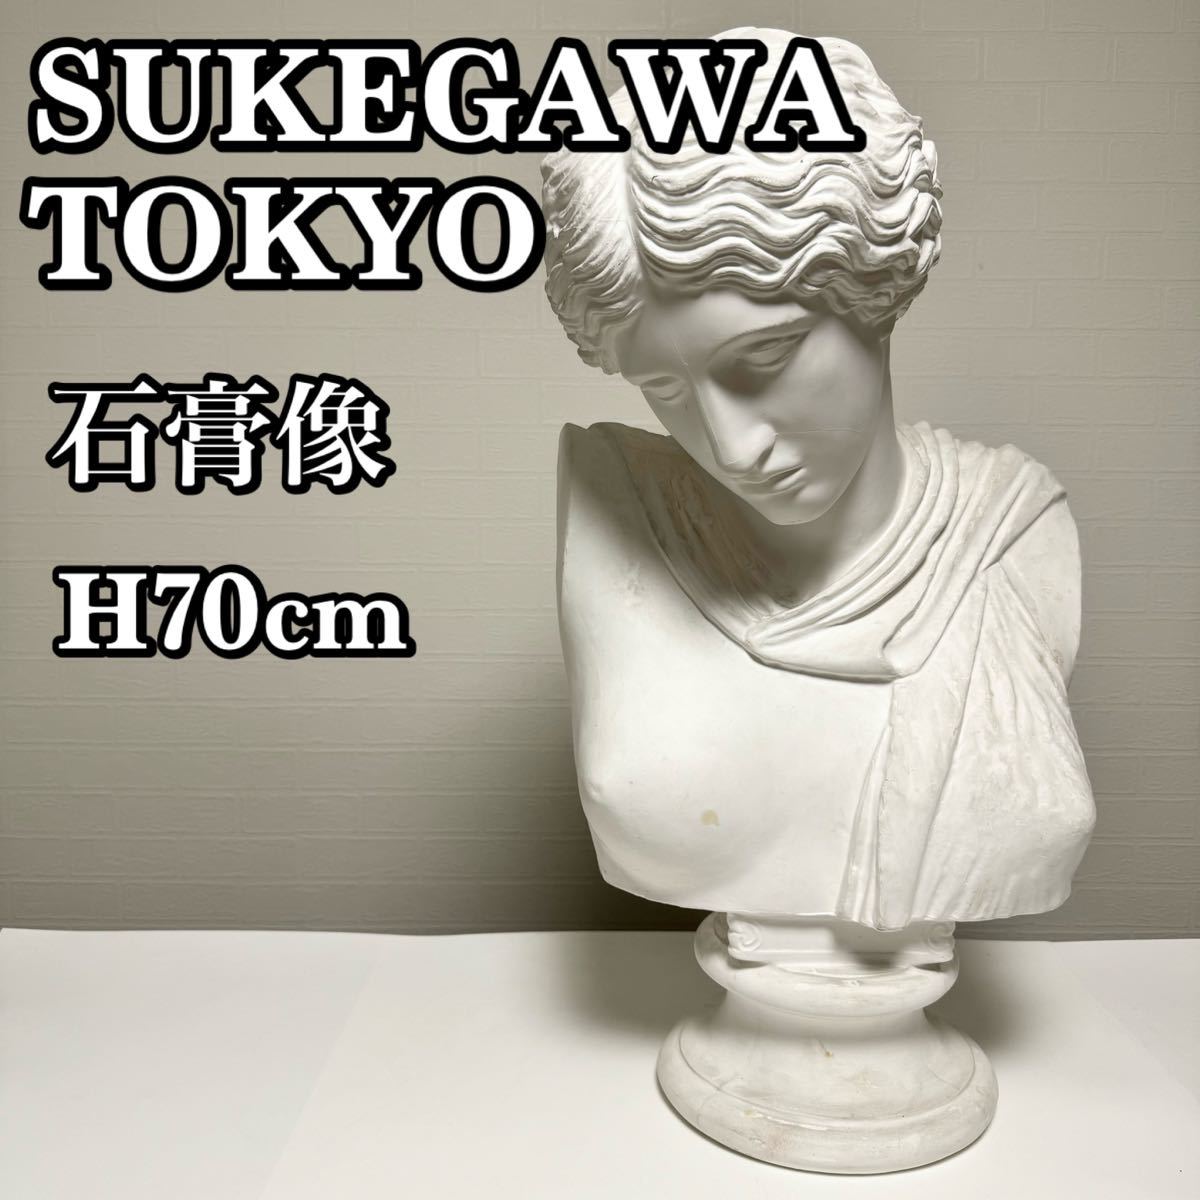 SUKEGAWA TOKYO 石膏像 ギリシャ婦人胸像 婦人像 インテリア オブジェ